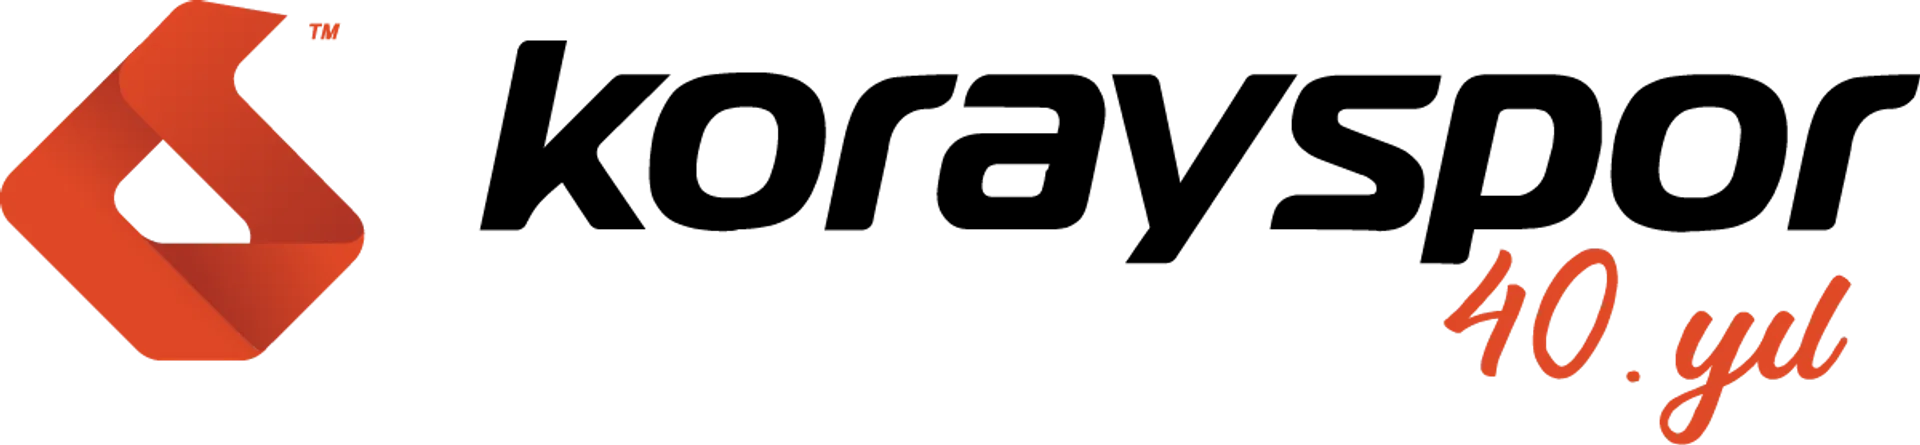 KORAYSPOR logo